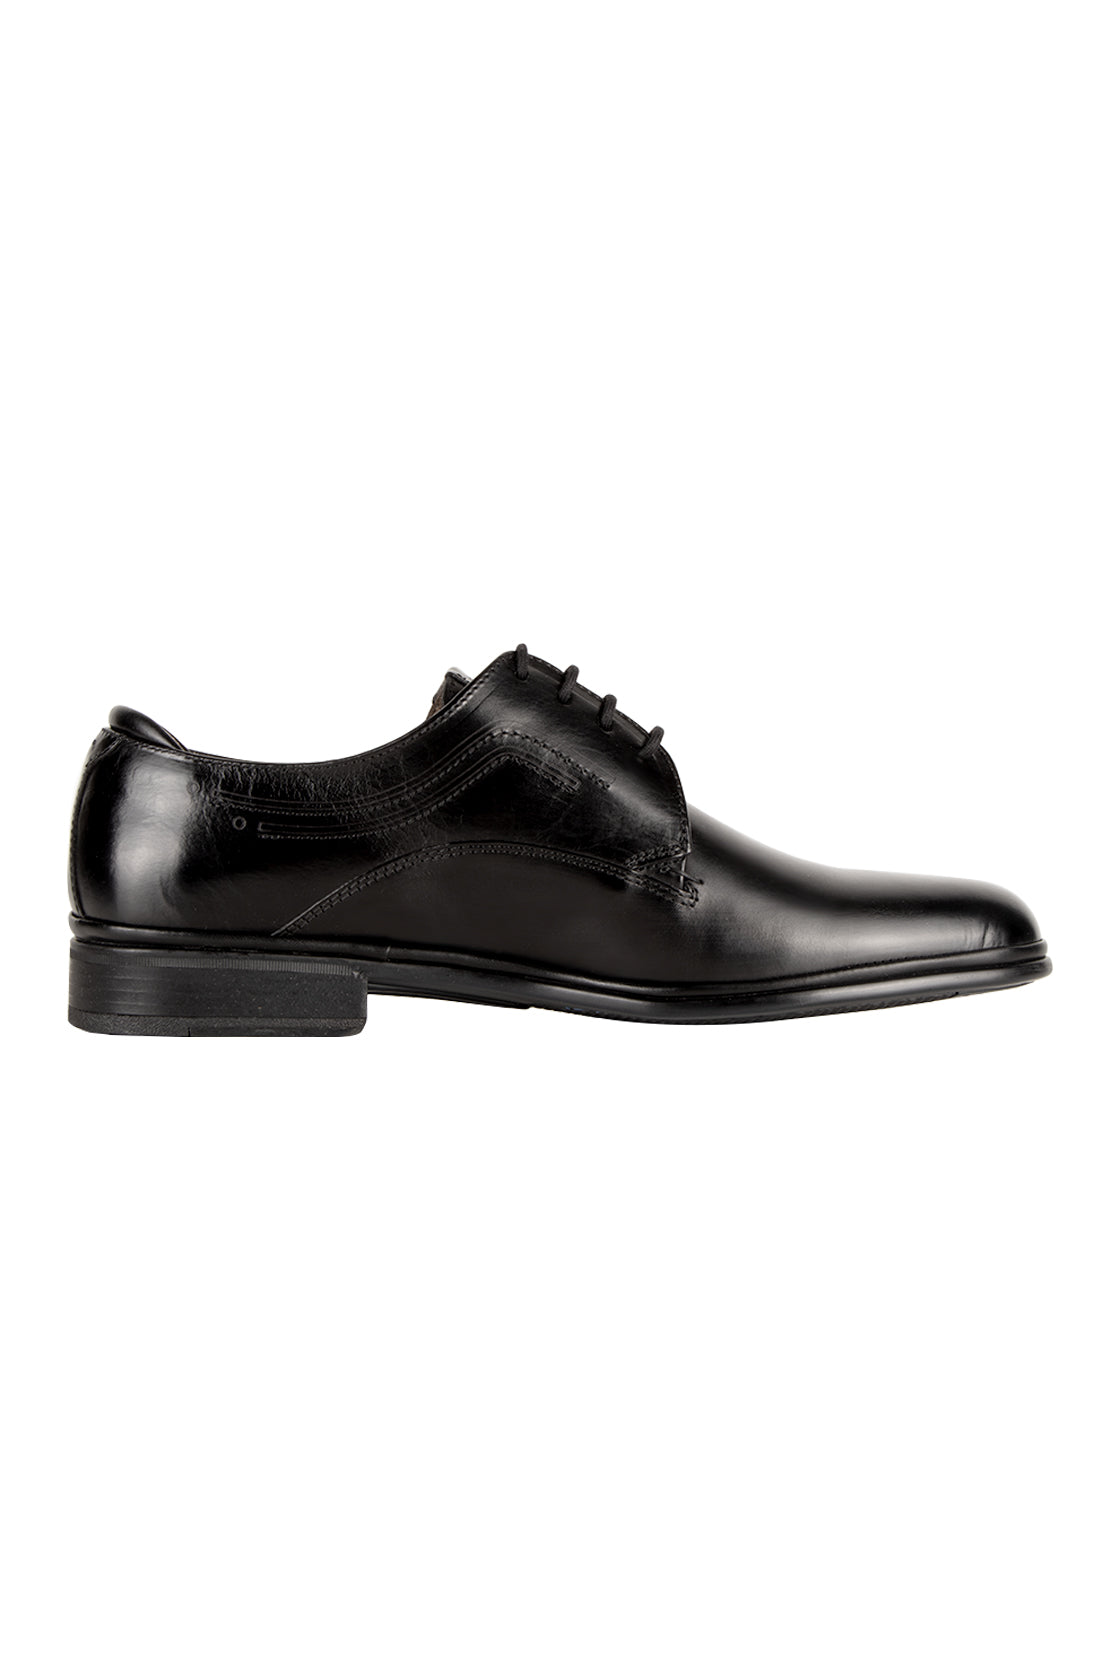 Galizio Torresi Dress Shoe Black